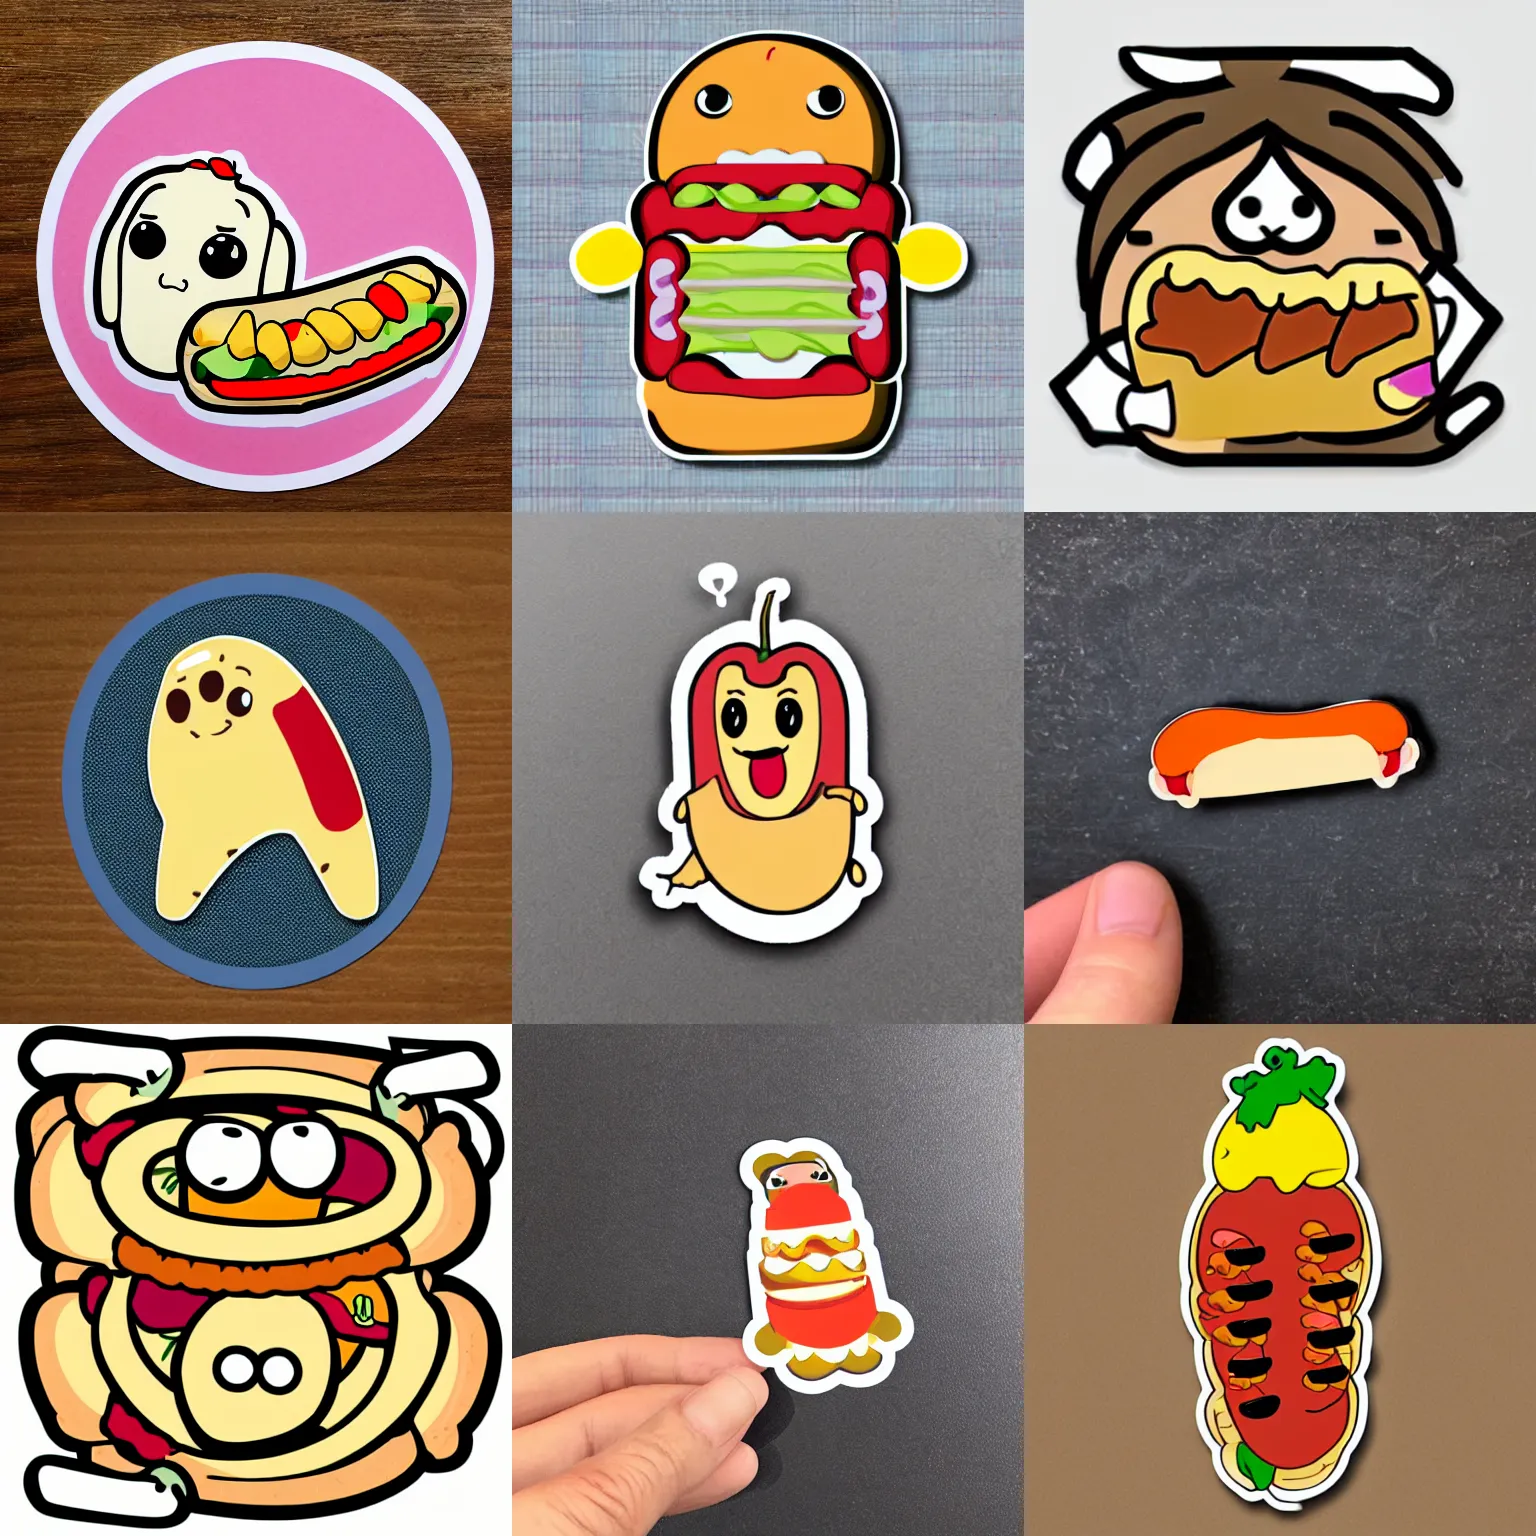 Prompt: cartoon die cut sticker of hotdog